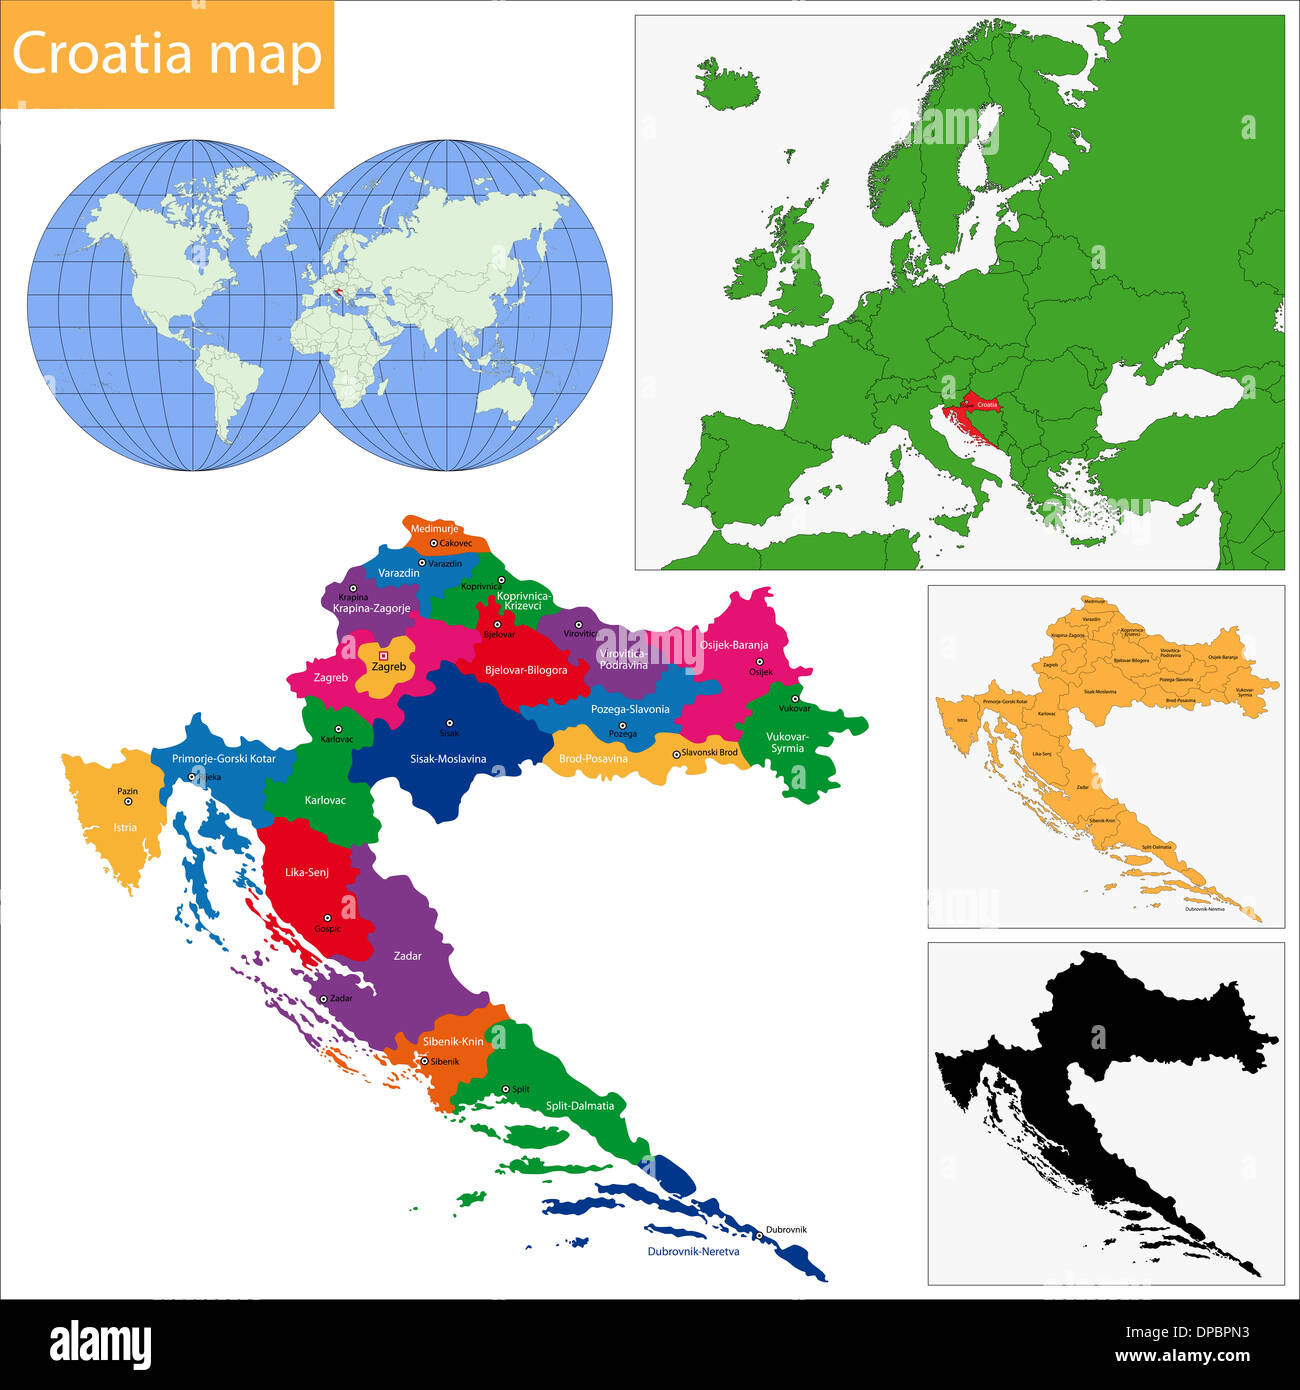 Croatia map Stock Photo